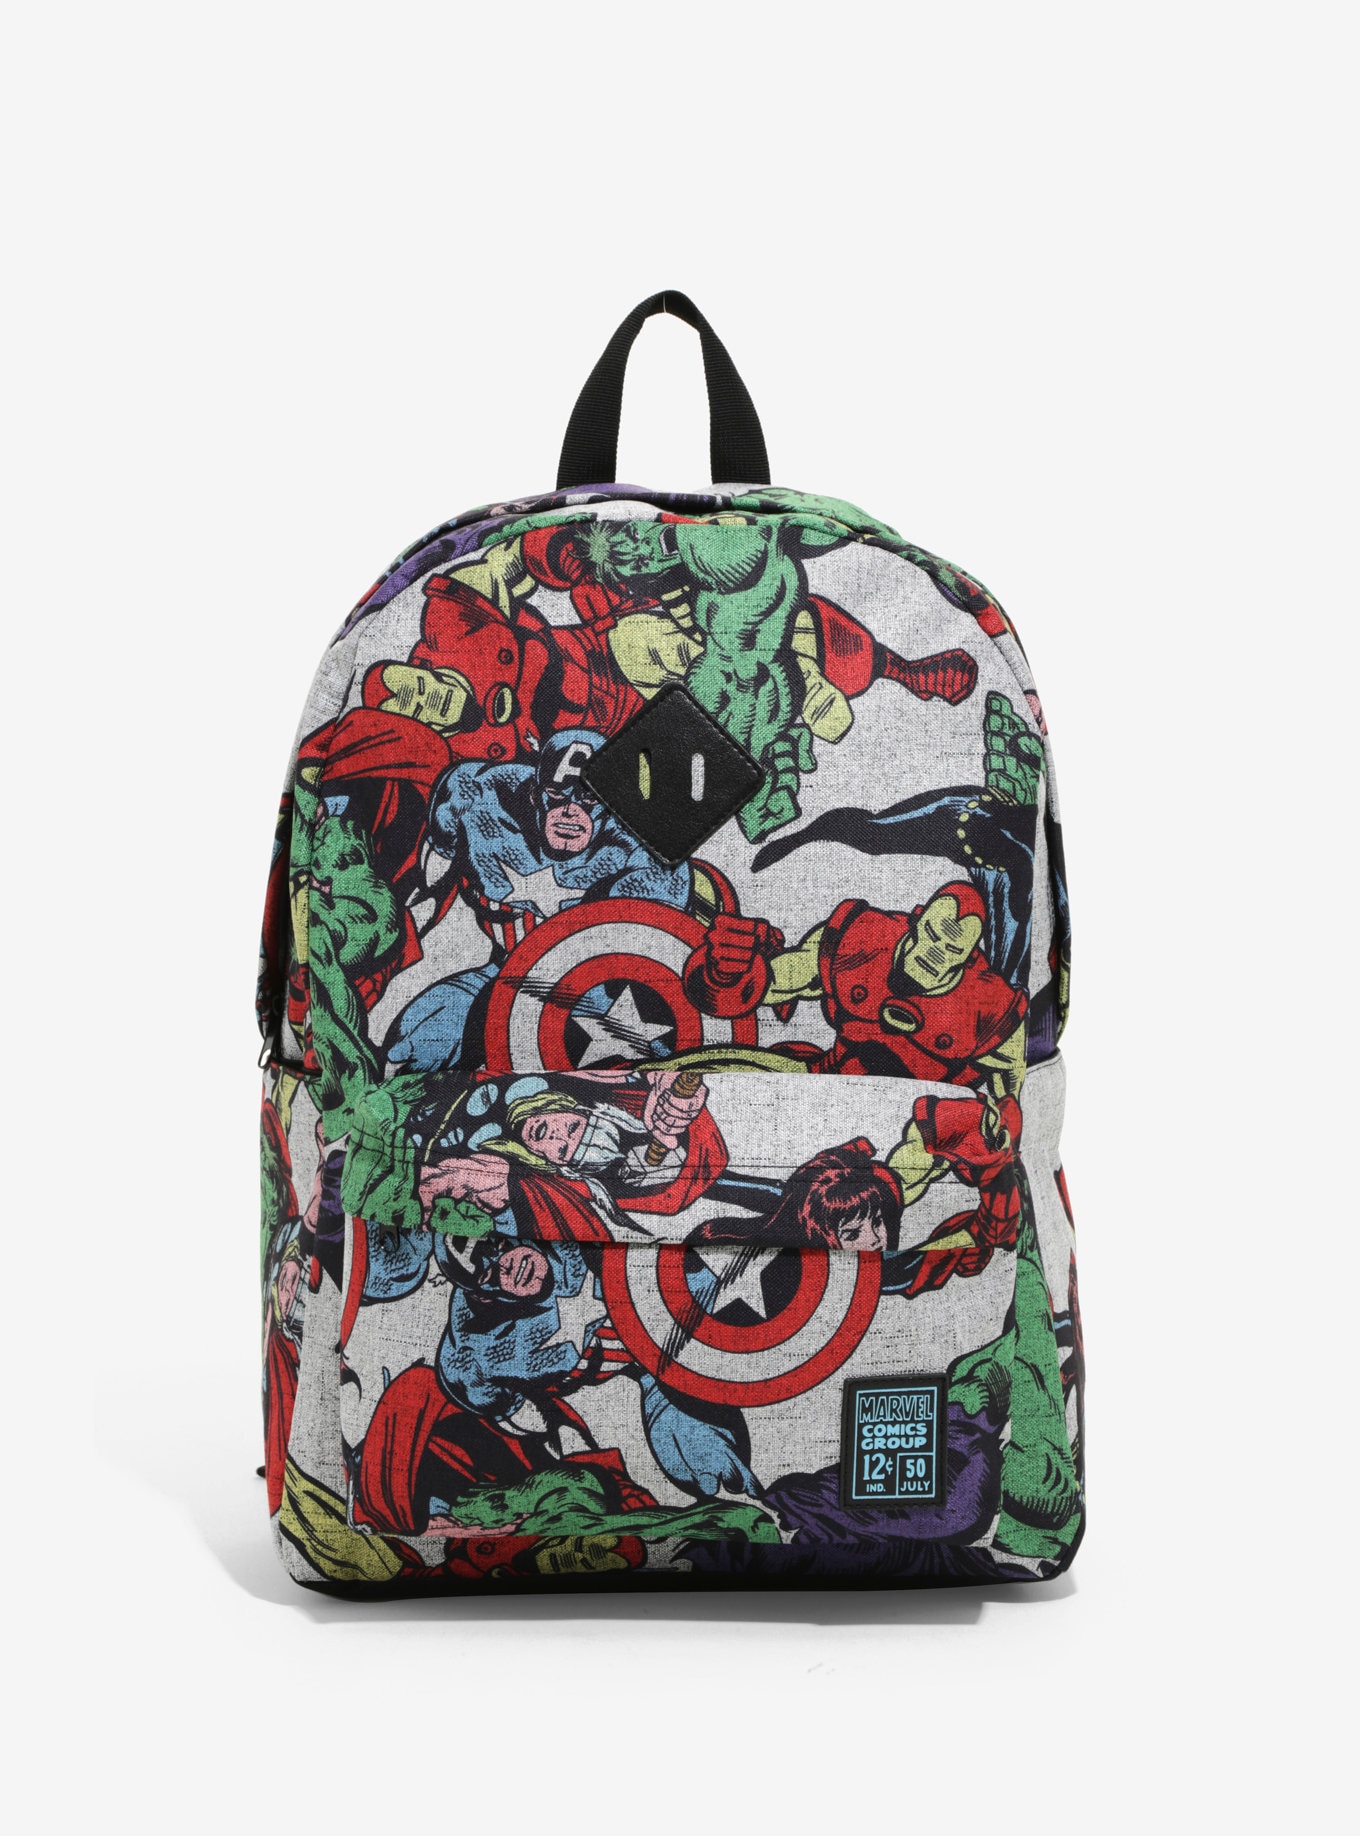 Marvel Avengers Print Backpack Book Bag Hulk, Black Widow, Iron Man, Captain America